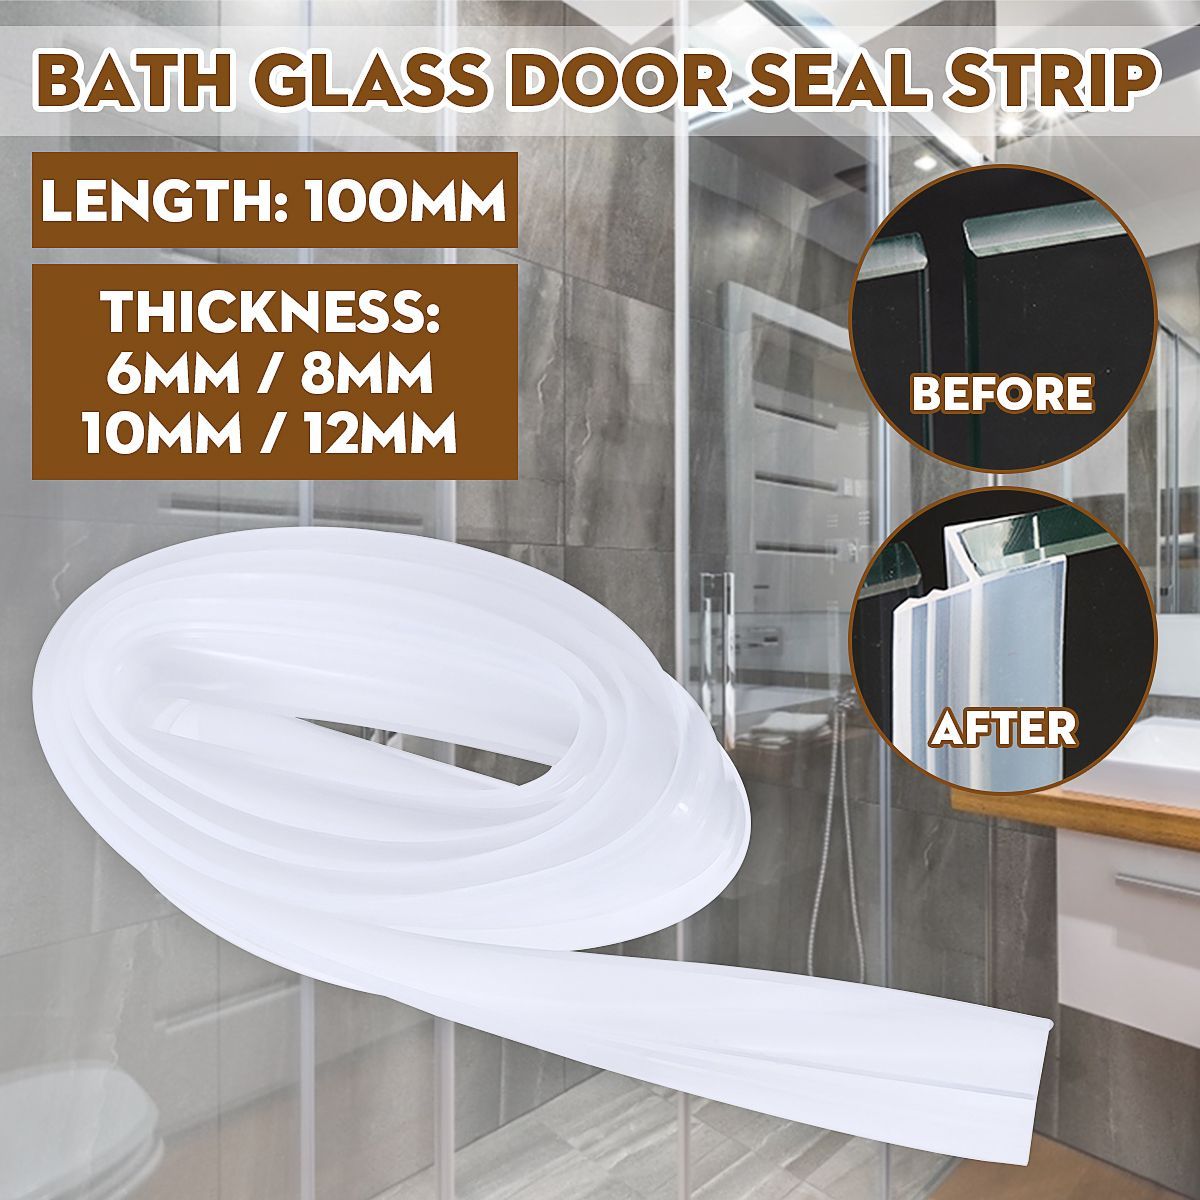 1M-h-Shape-Bath-Shower-Screen-Door-Window-Water-Sealing-Strip-Straight--681012mm-1561554